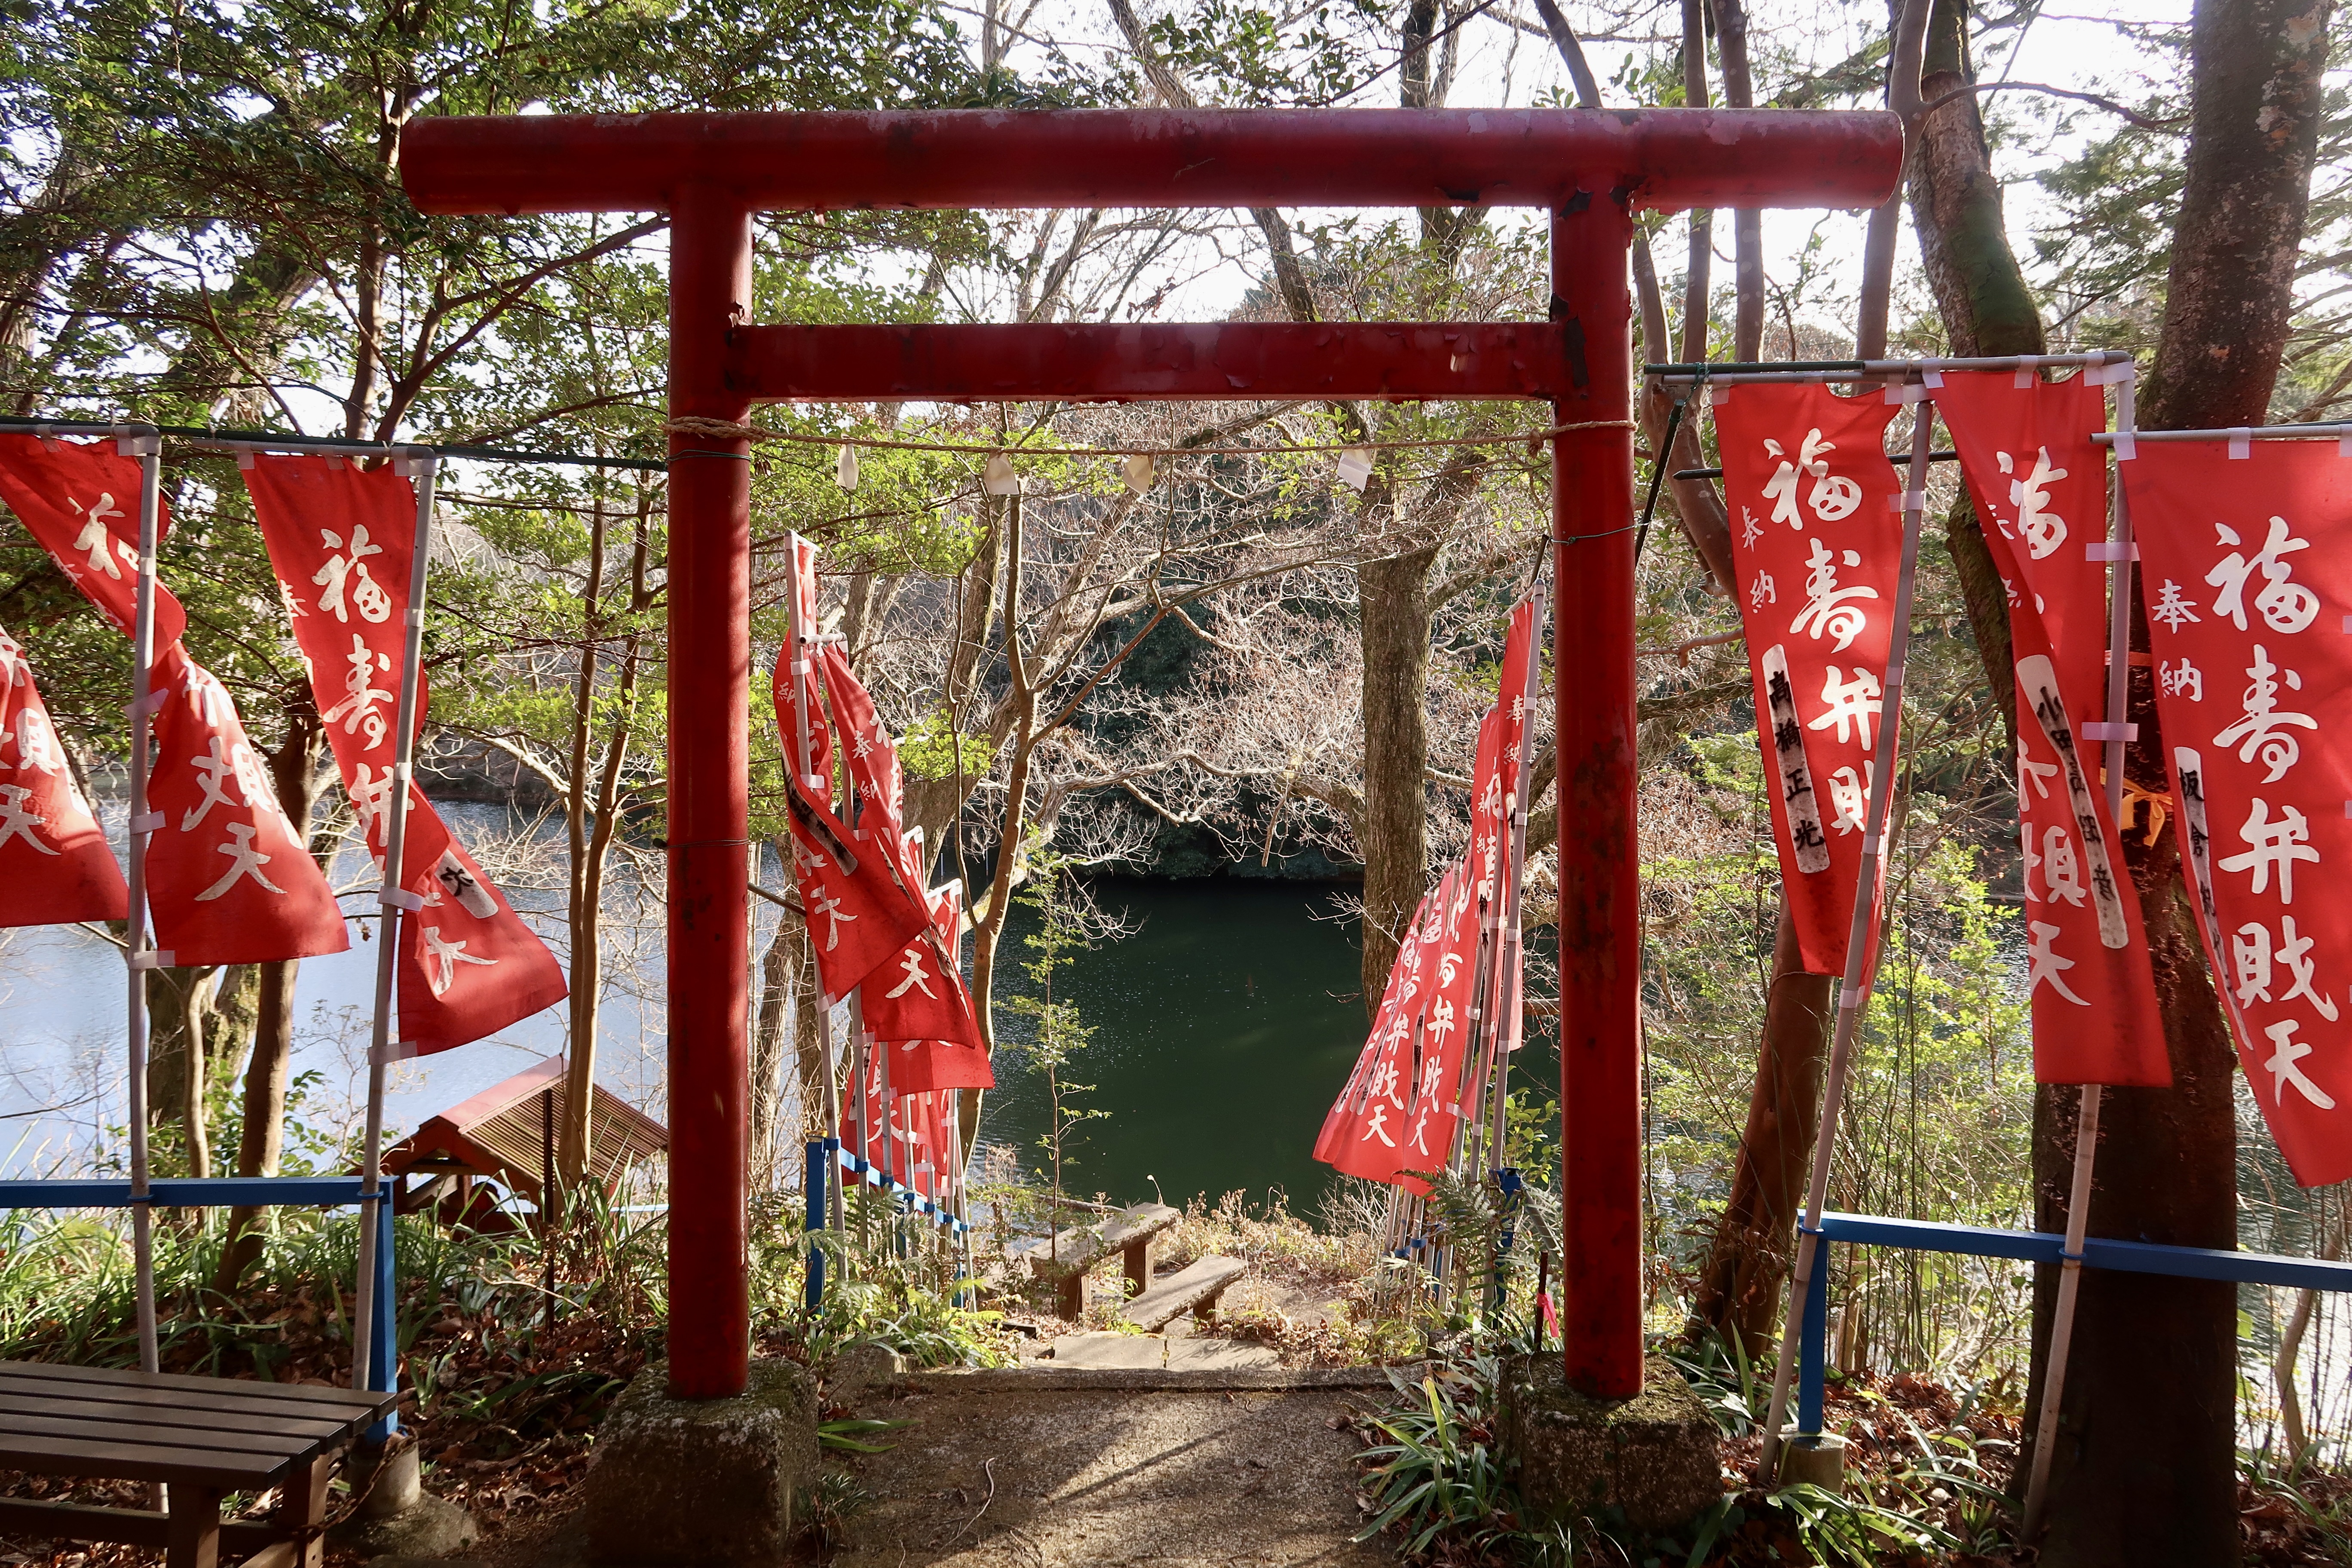 A lakeside Shinto shrine